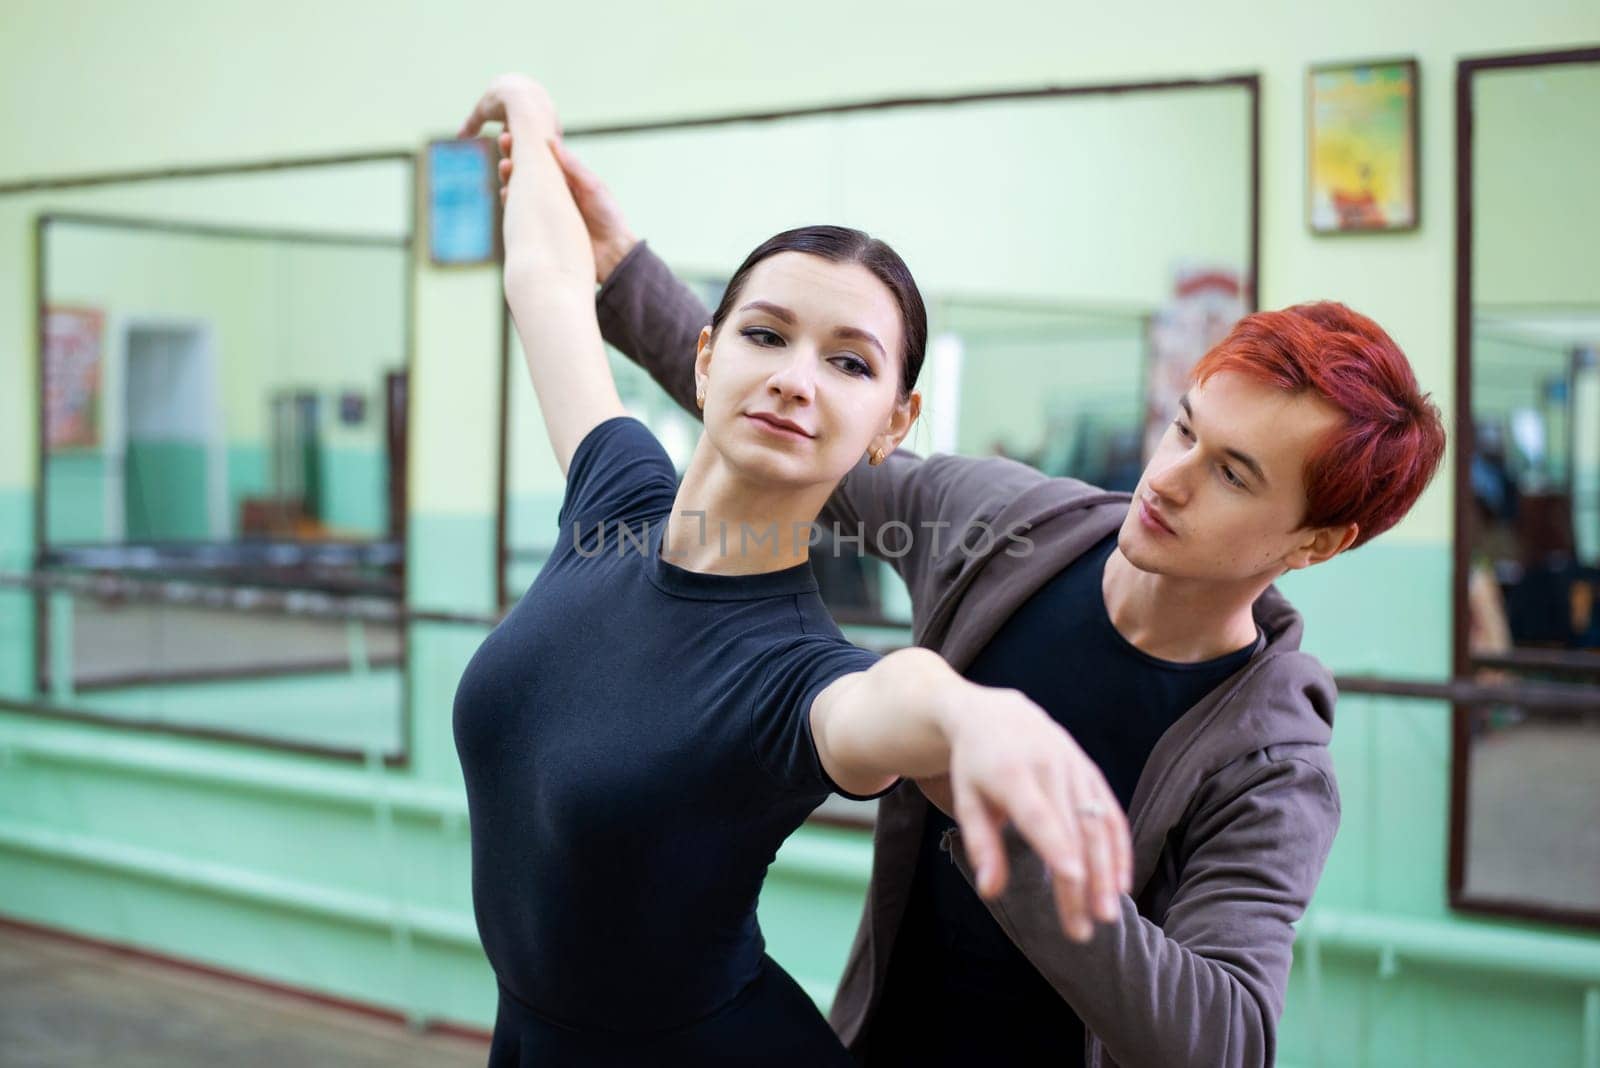 Dance teacher, learning choreography by VitaliiPetrushenko